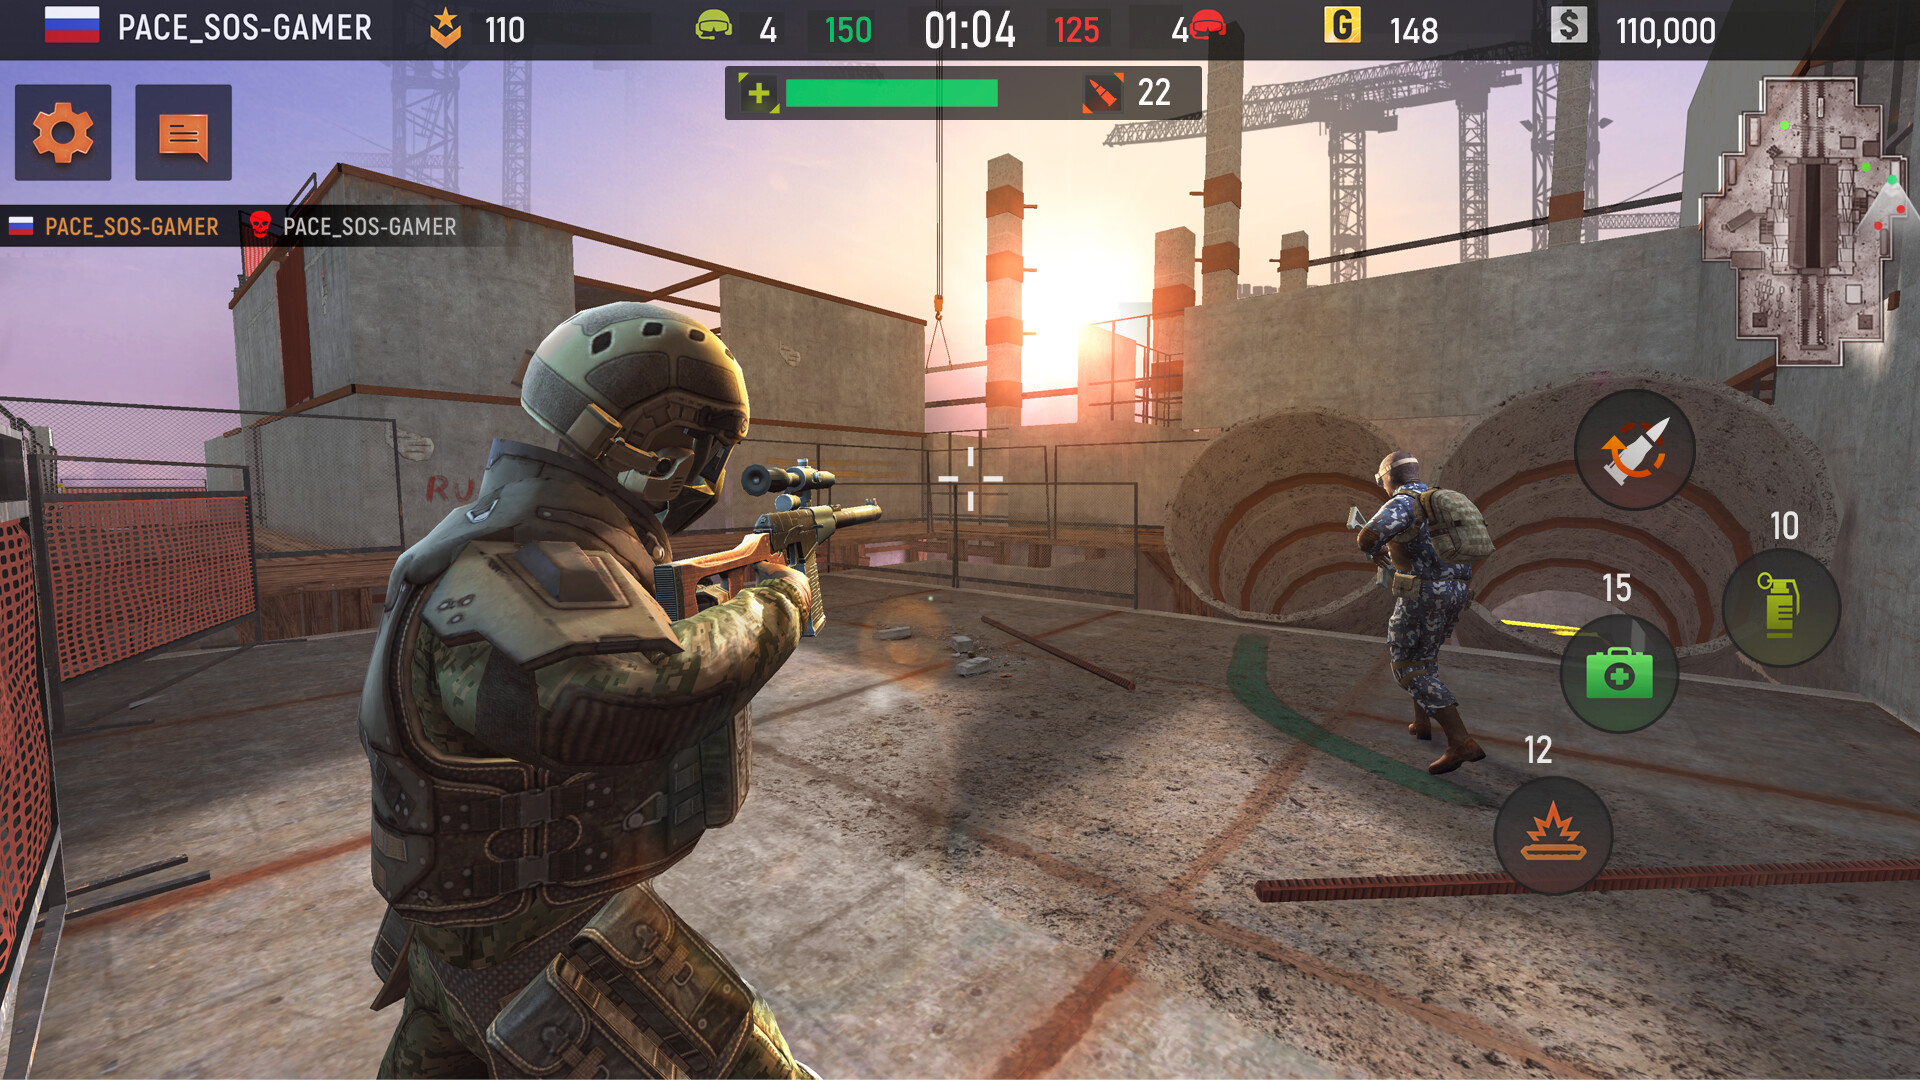 striker zone war shooting games online